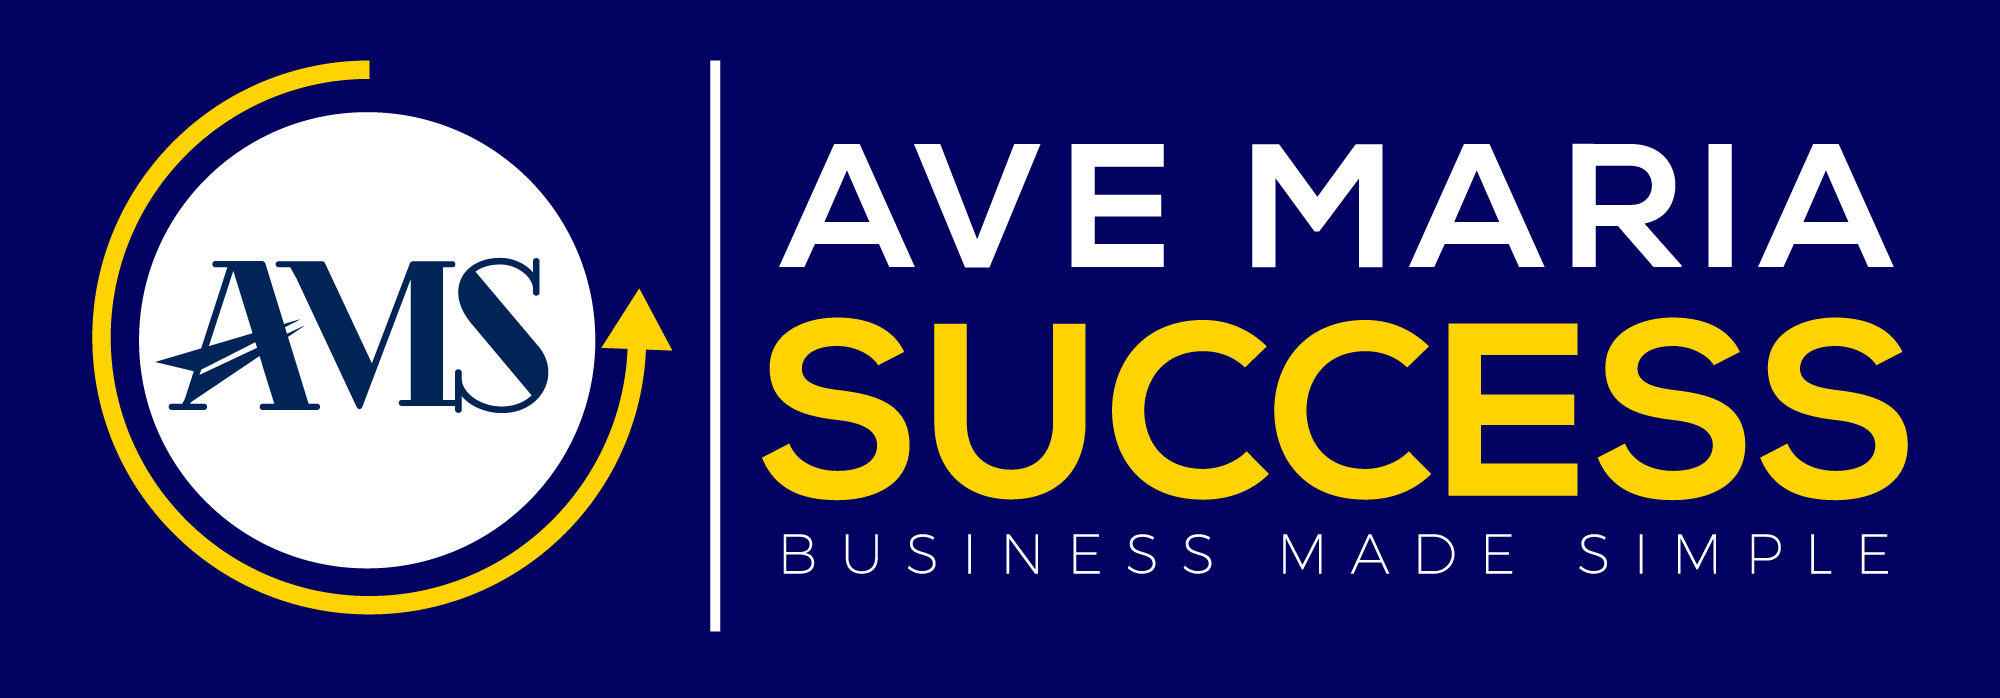 Ave-Maria-Success-logo-B1